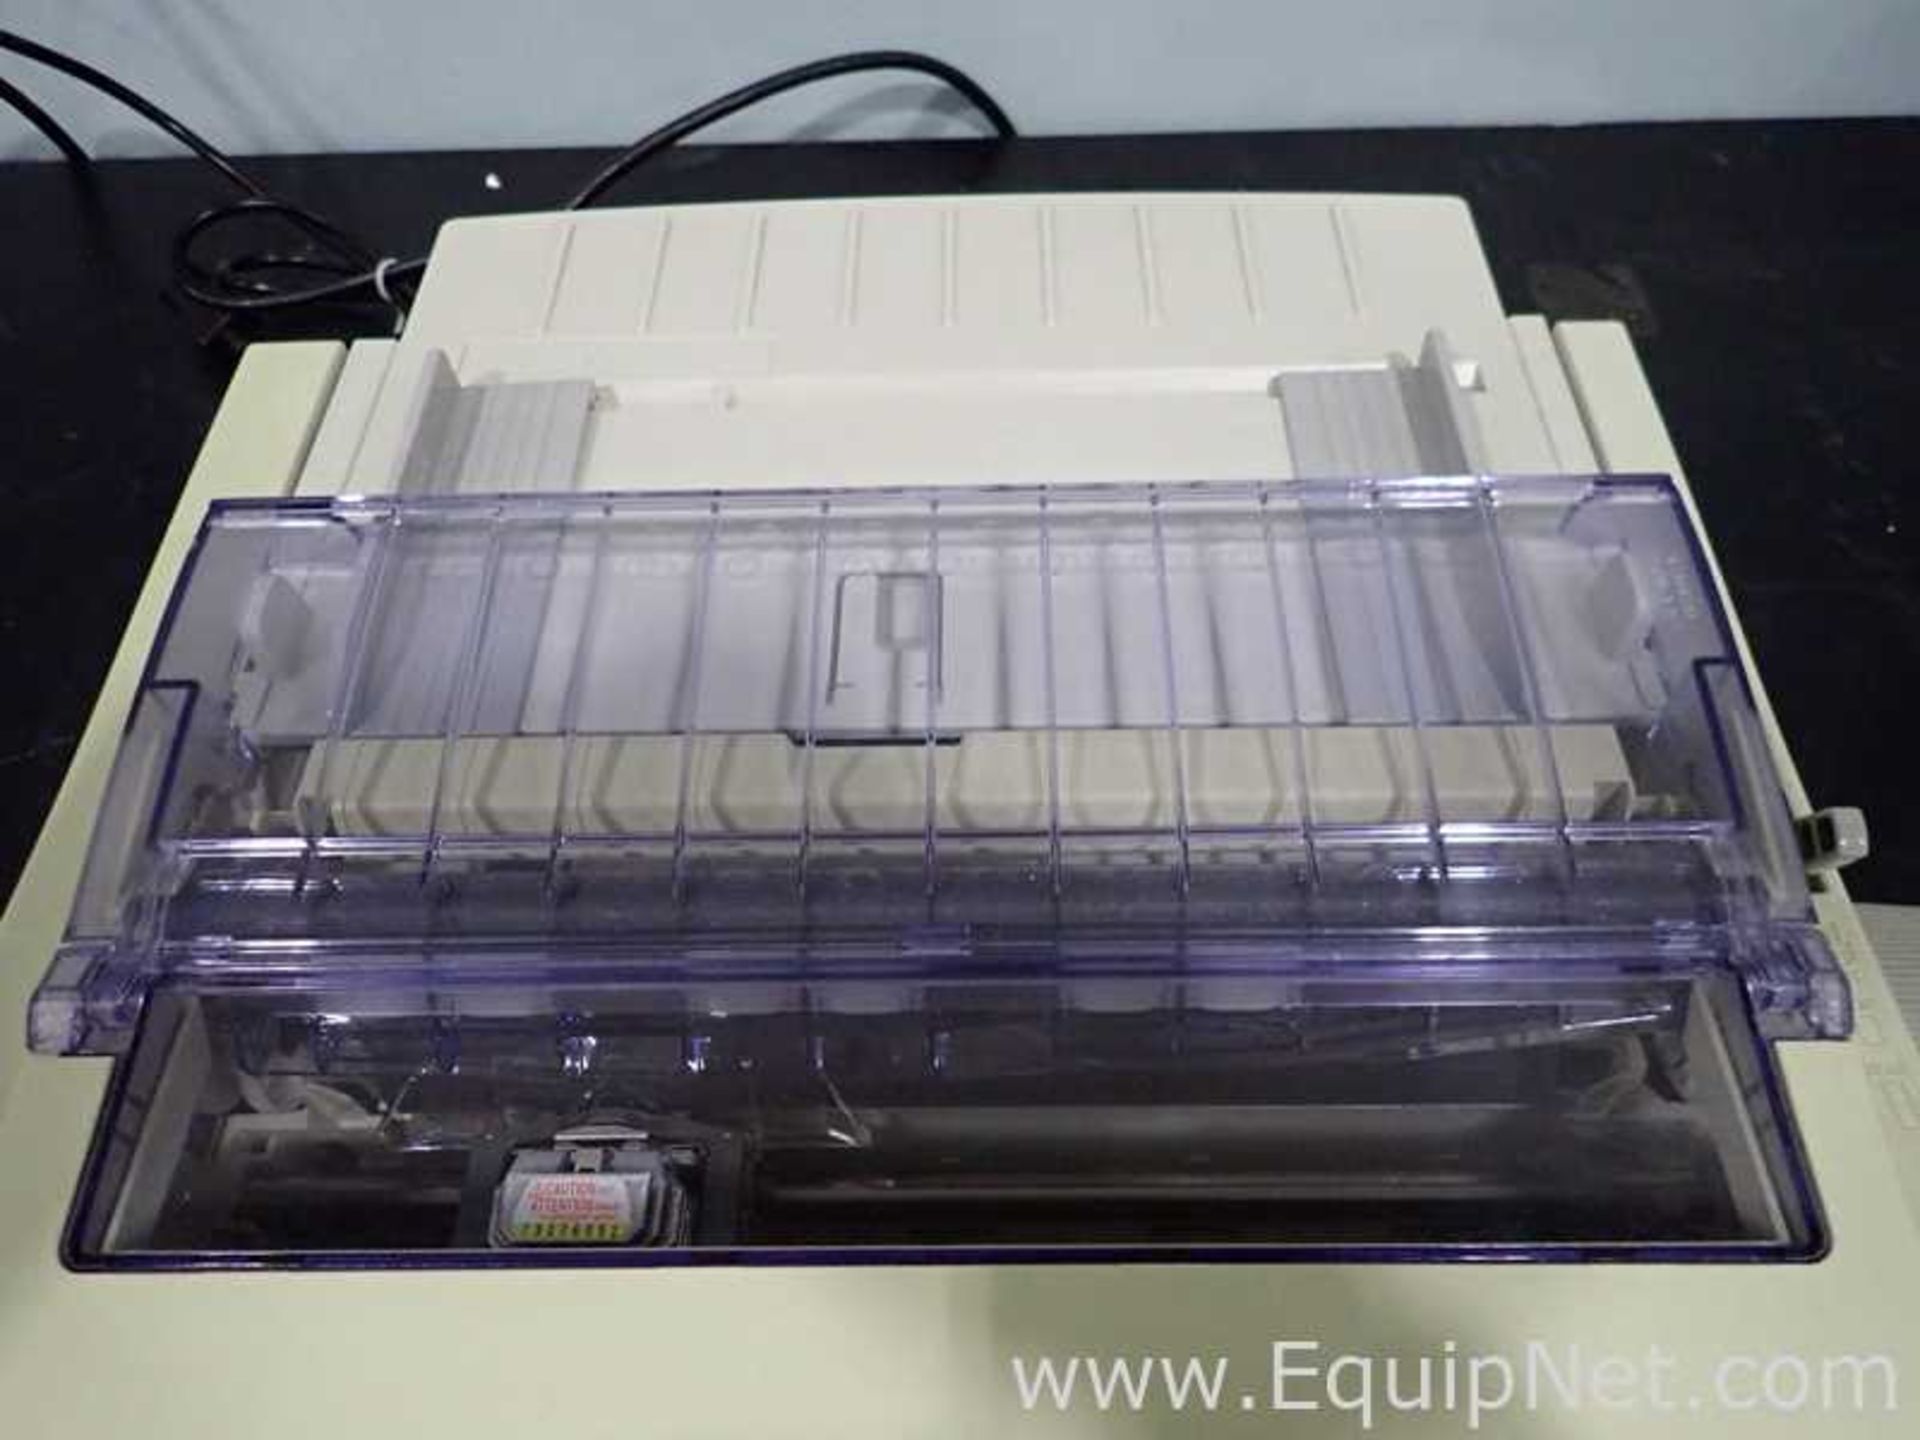 OKI D22200A Microline 420 9-Pin Impact Printer - Image 3 of 8